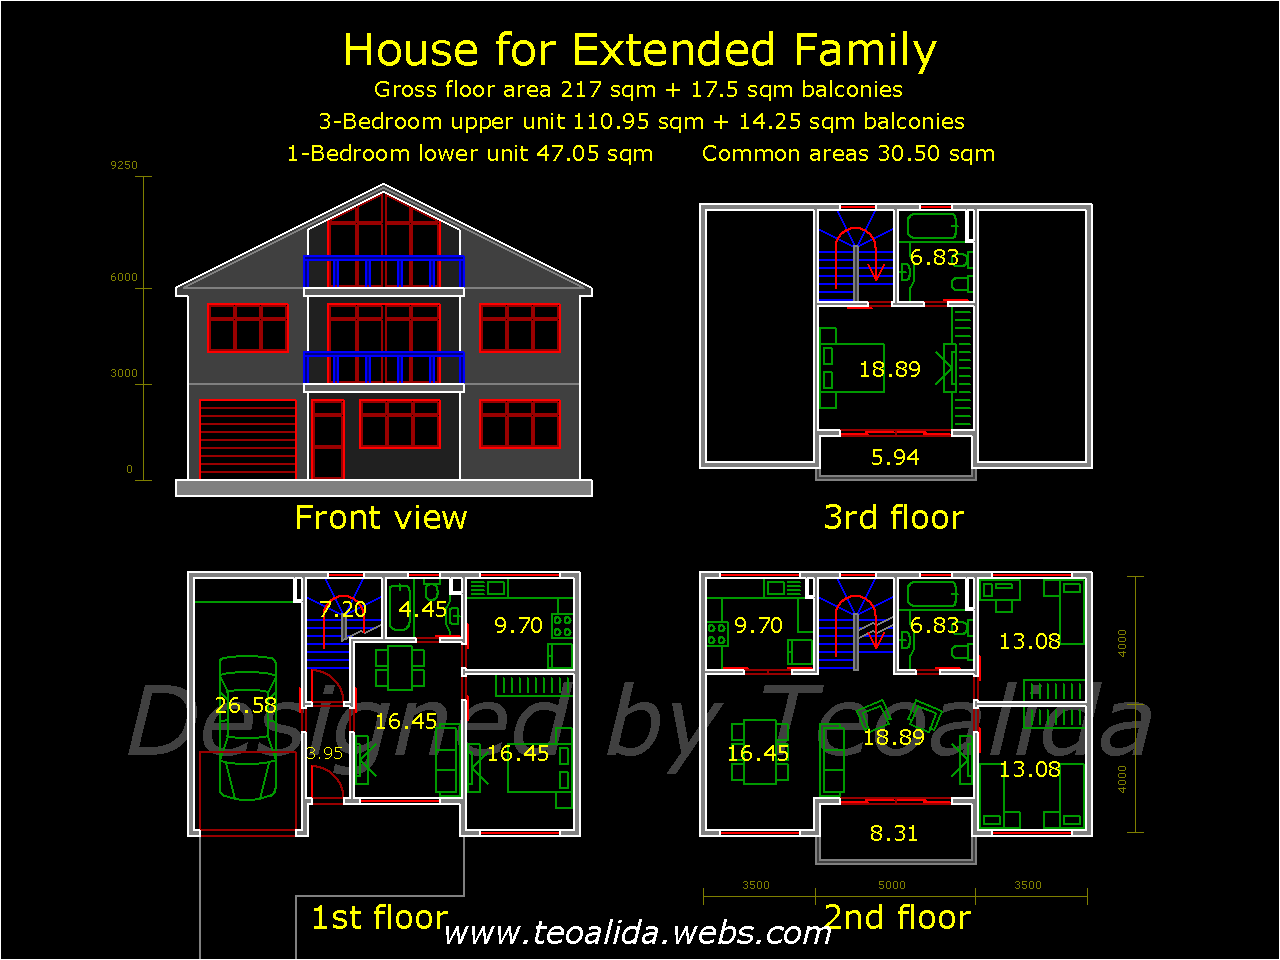 House floor plans 50-400 sqm designed by Teoalida | Teoalida Website